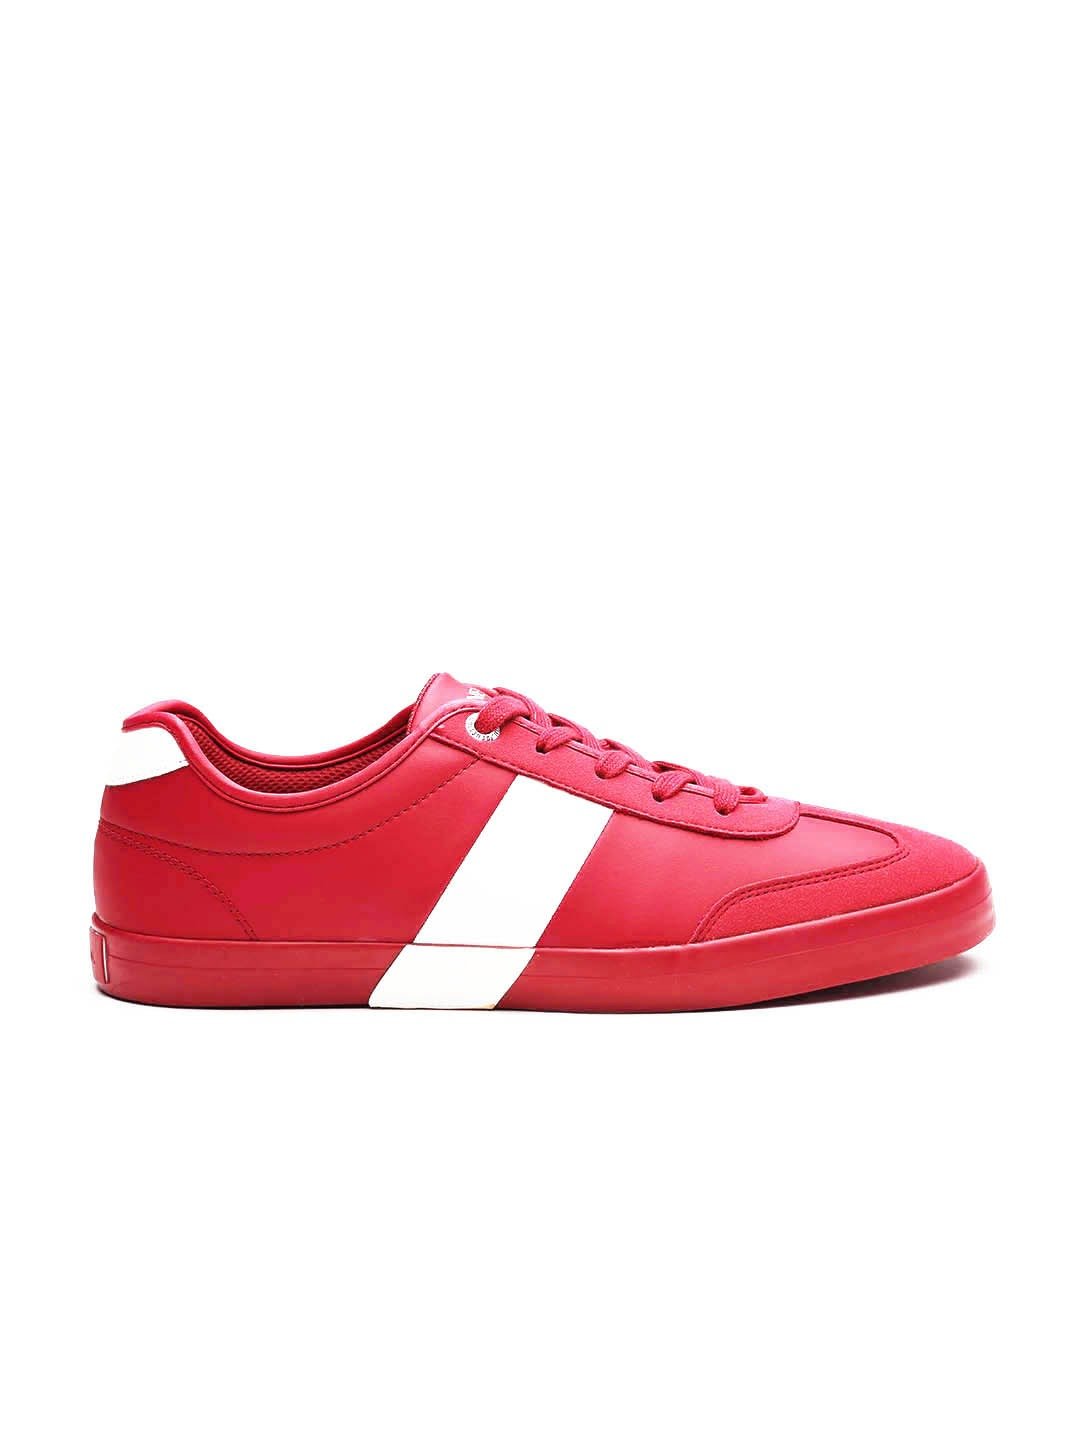 Men Red Sneakers - Discount Store